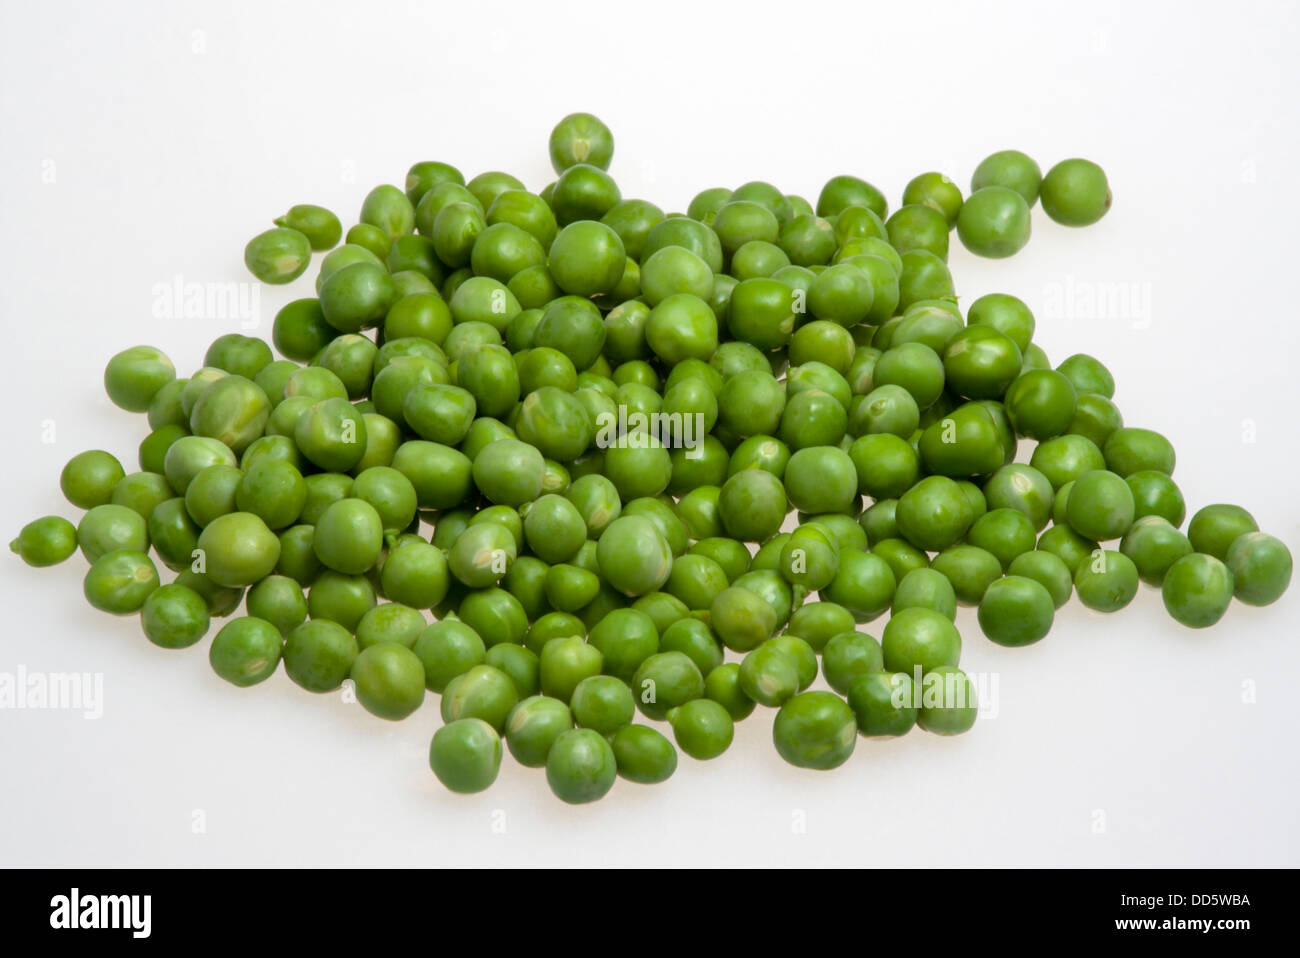 Food, Vegetables, Peas, Fresh ripe green English garden peas Pisum sativum on a white background. Stock Photo